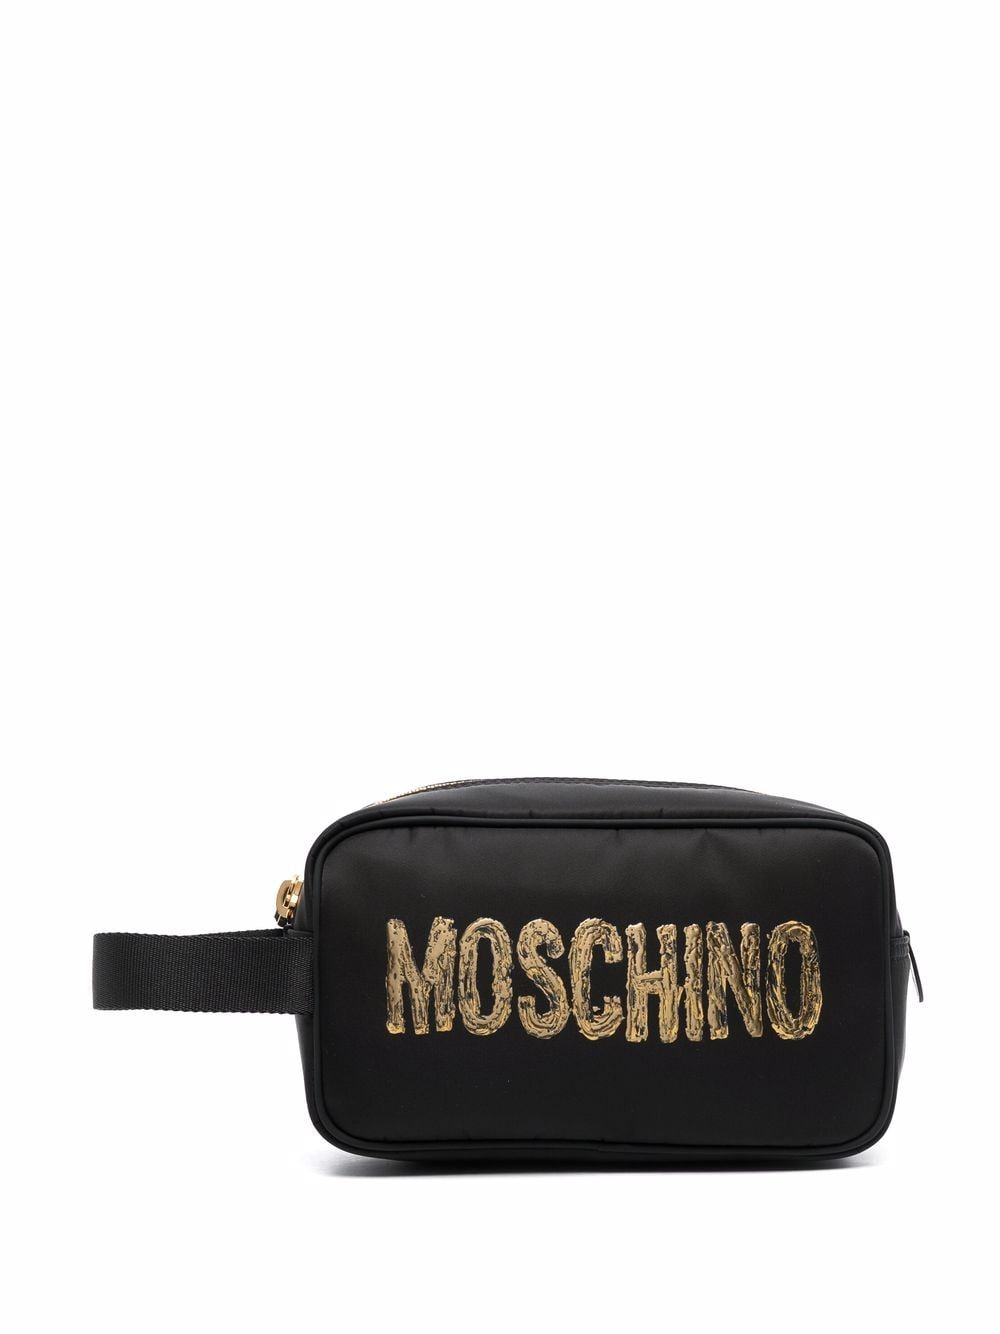 фото Moschino несессер с логотипом